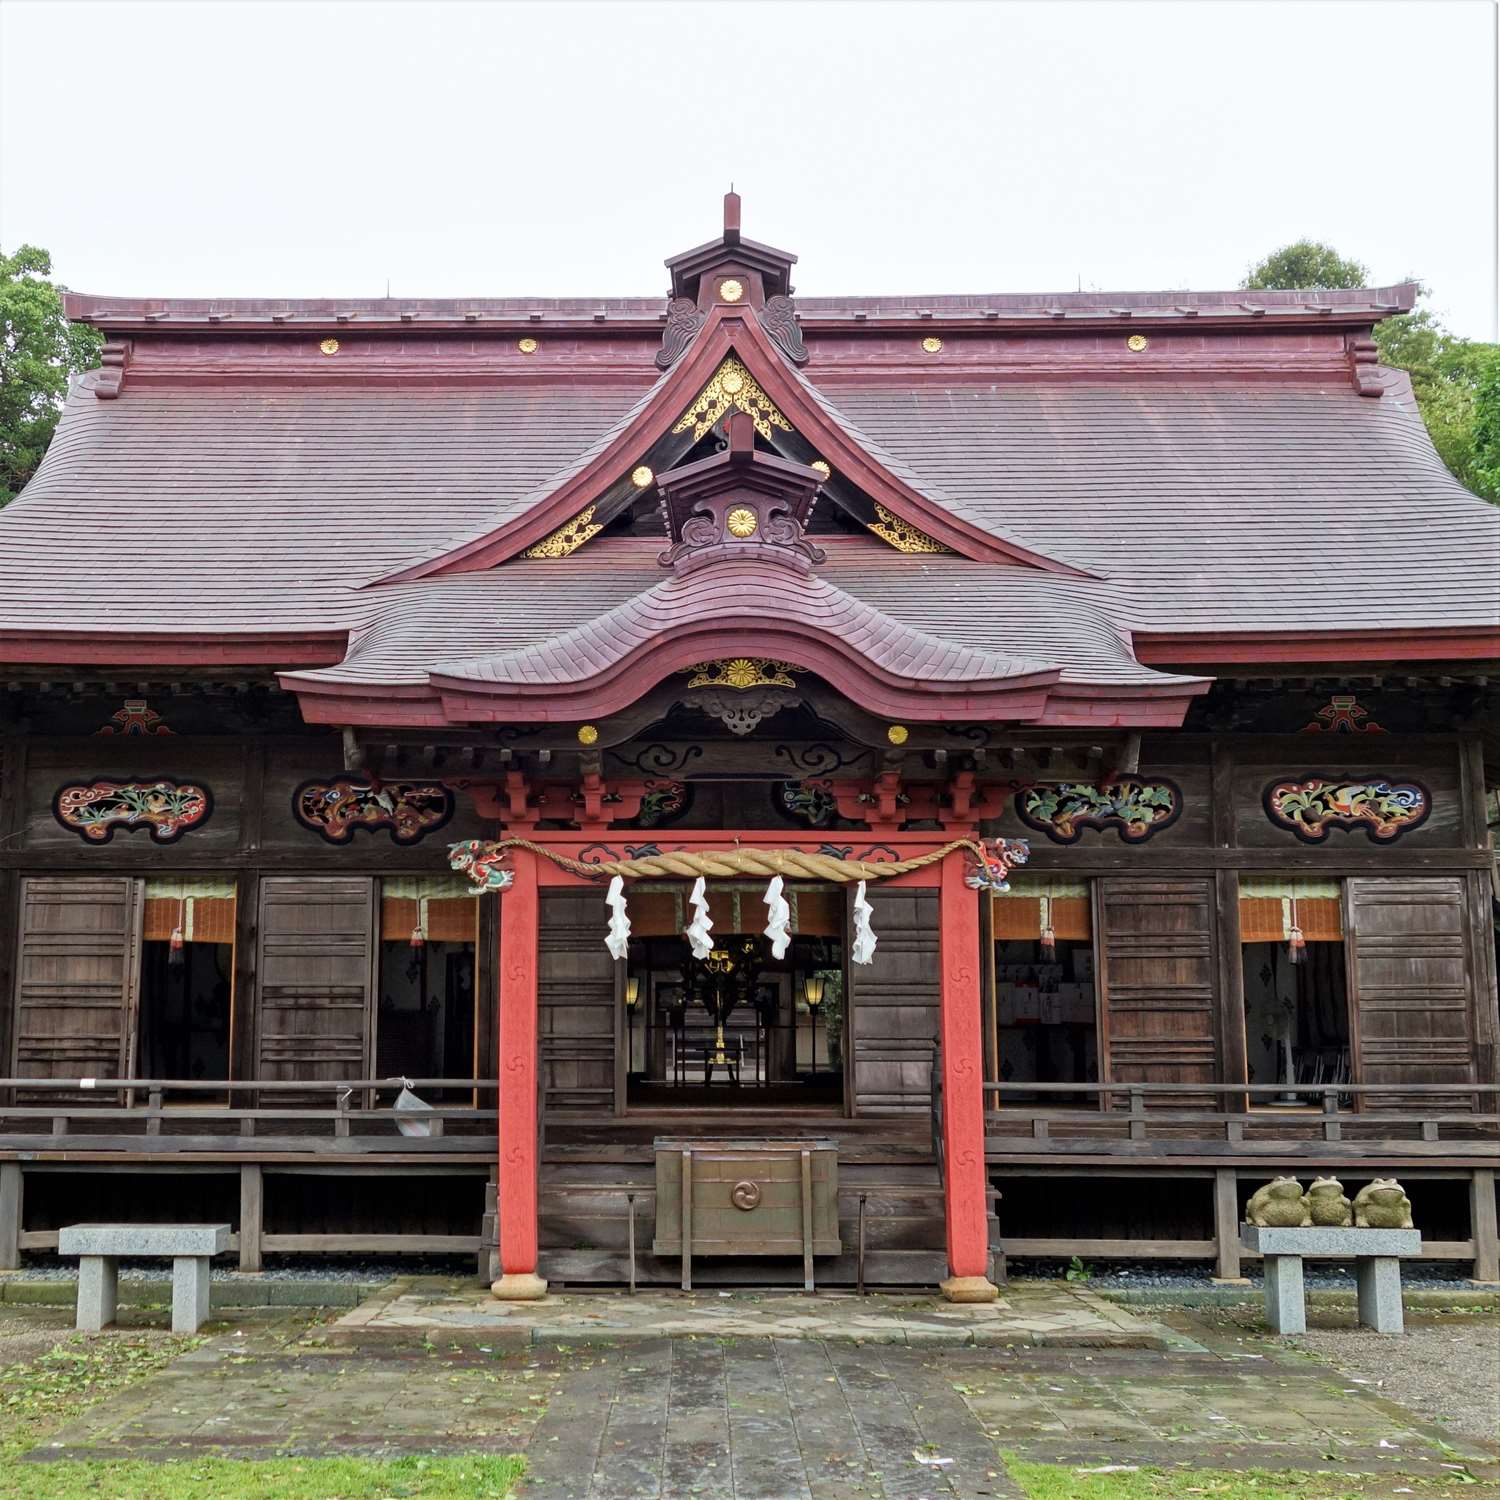 "Kamiiso no Torii Gate" at Oarai-Isosaki Jinja Shrine, Ibaraki Prefecture = Shutterstock 2